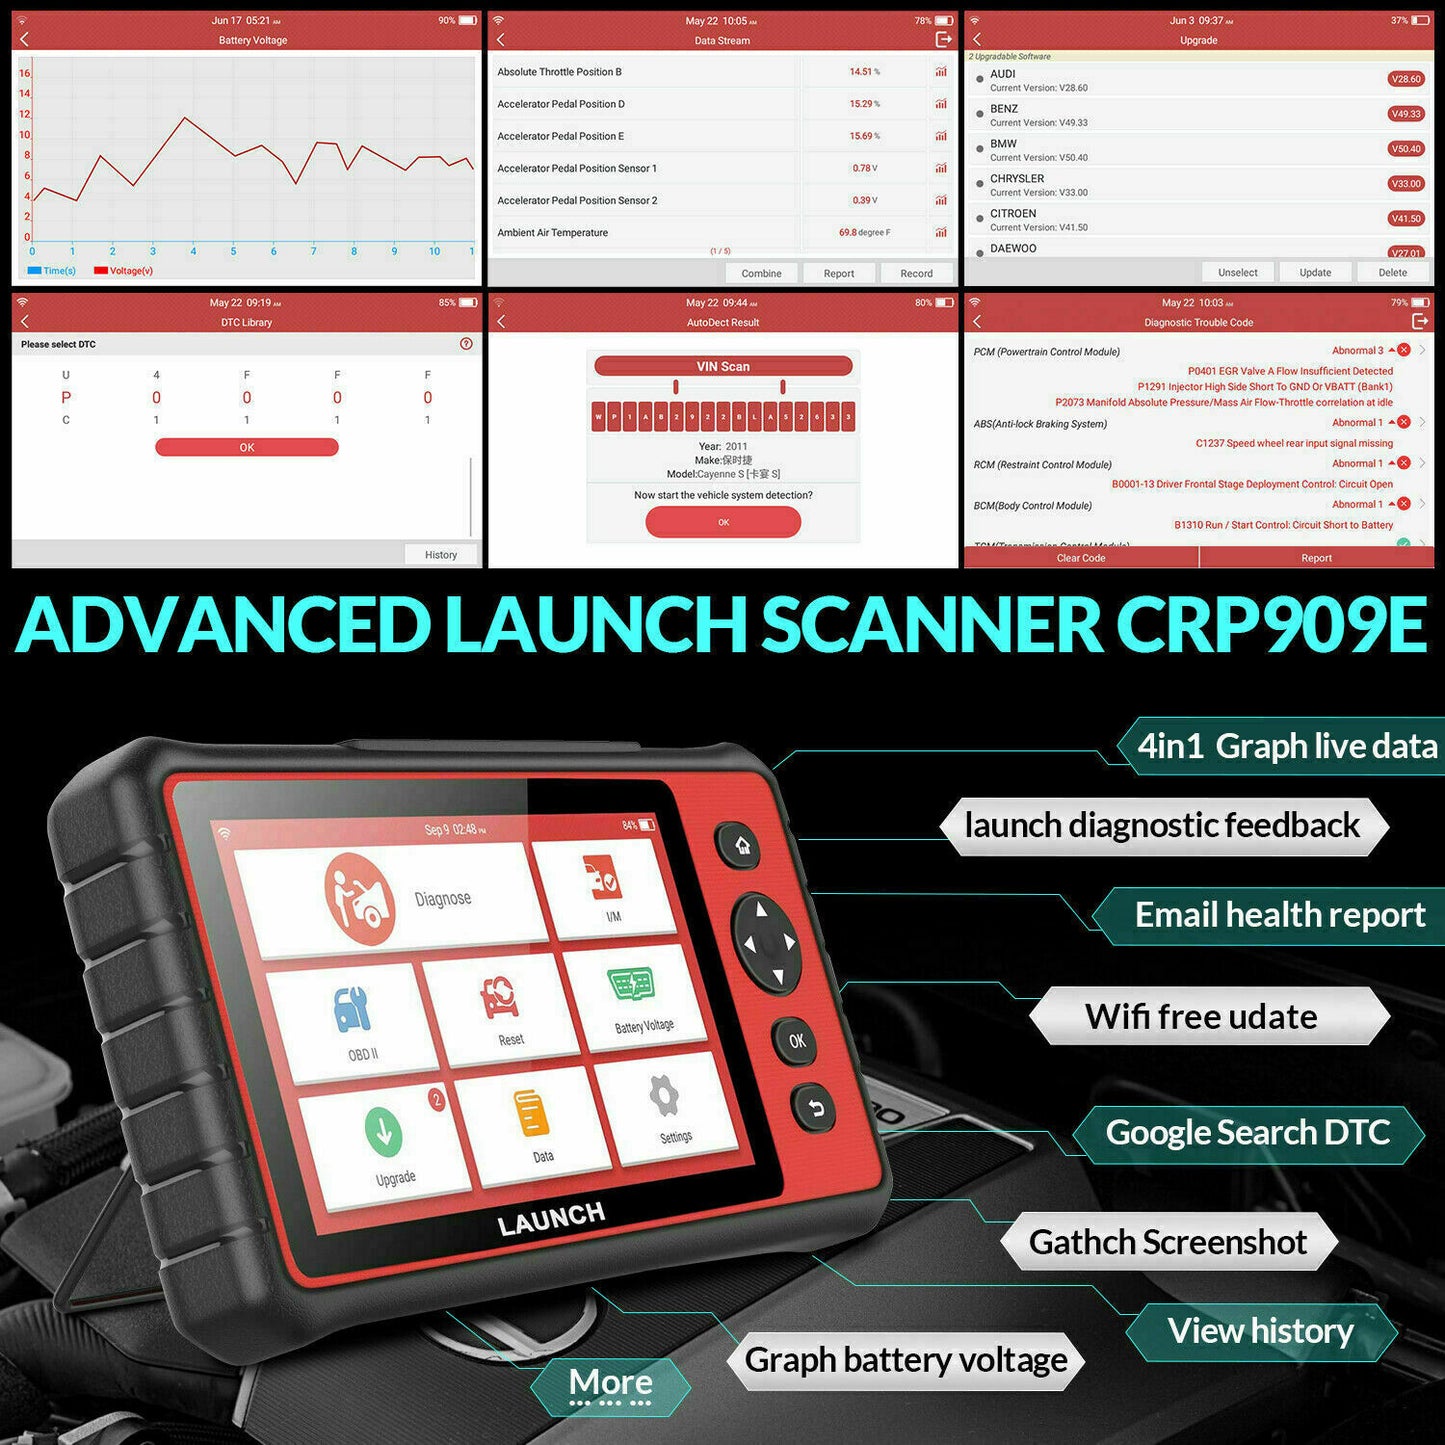 Launch CRP PRO 909E Opgraderet CRP229 Universal Code Reader Car Scanner